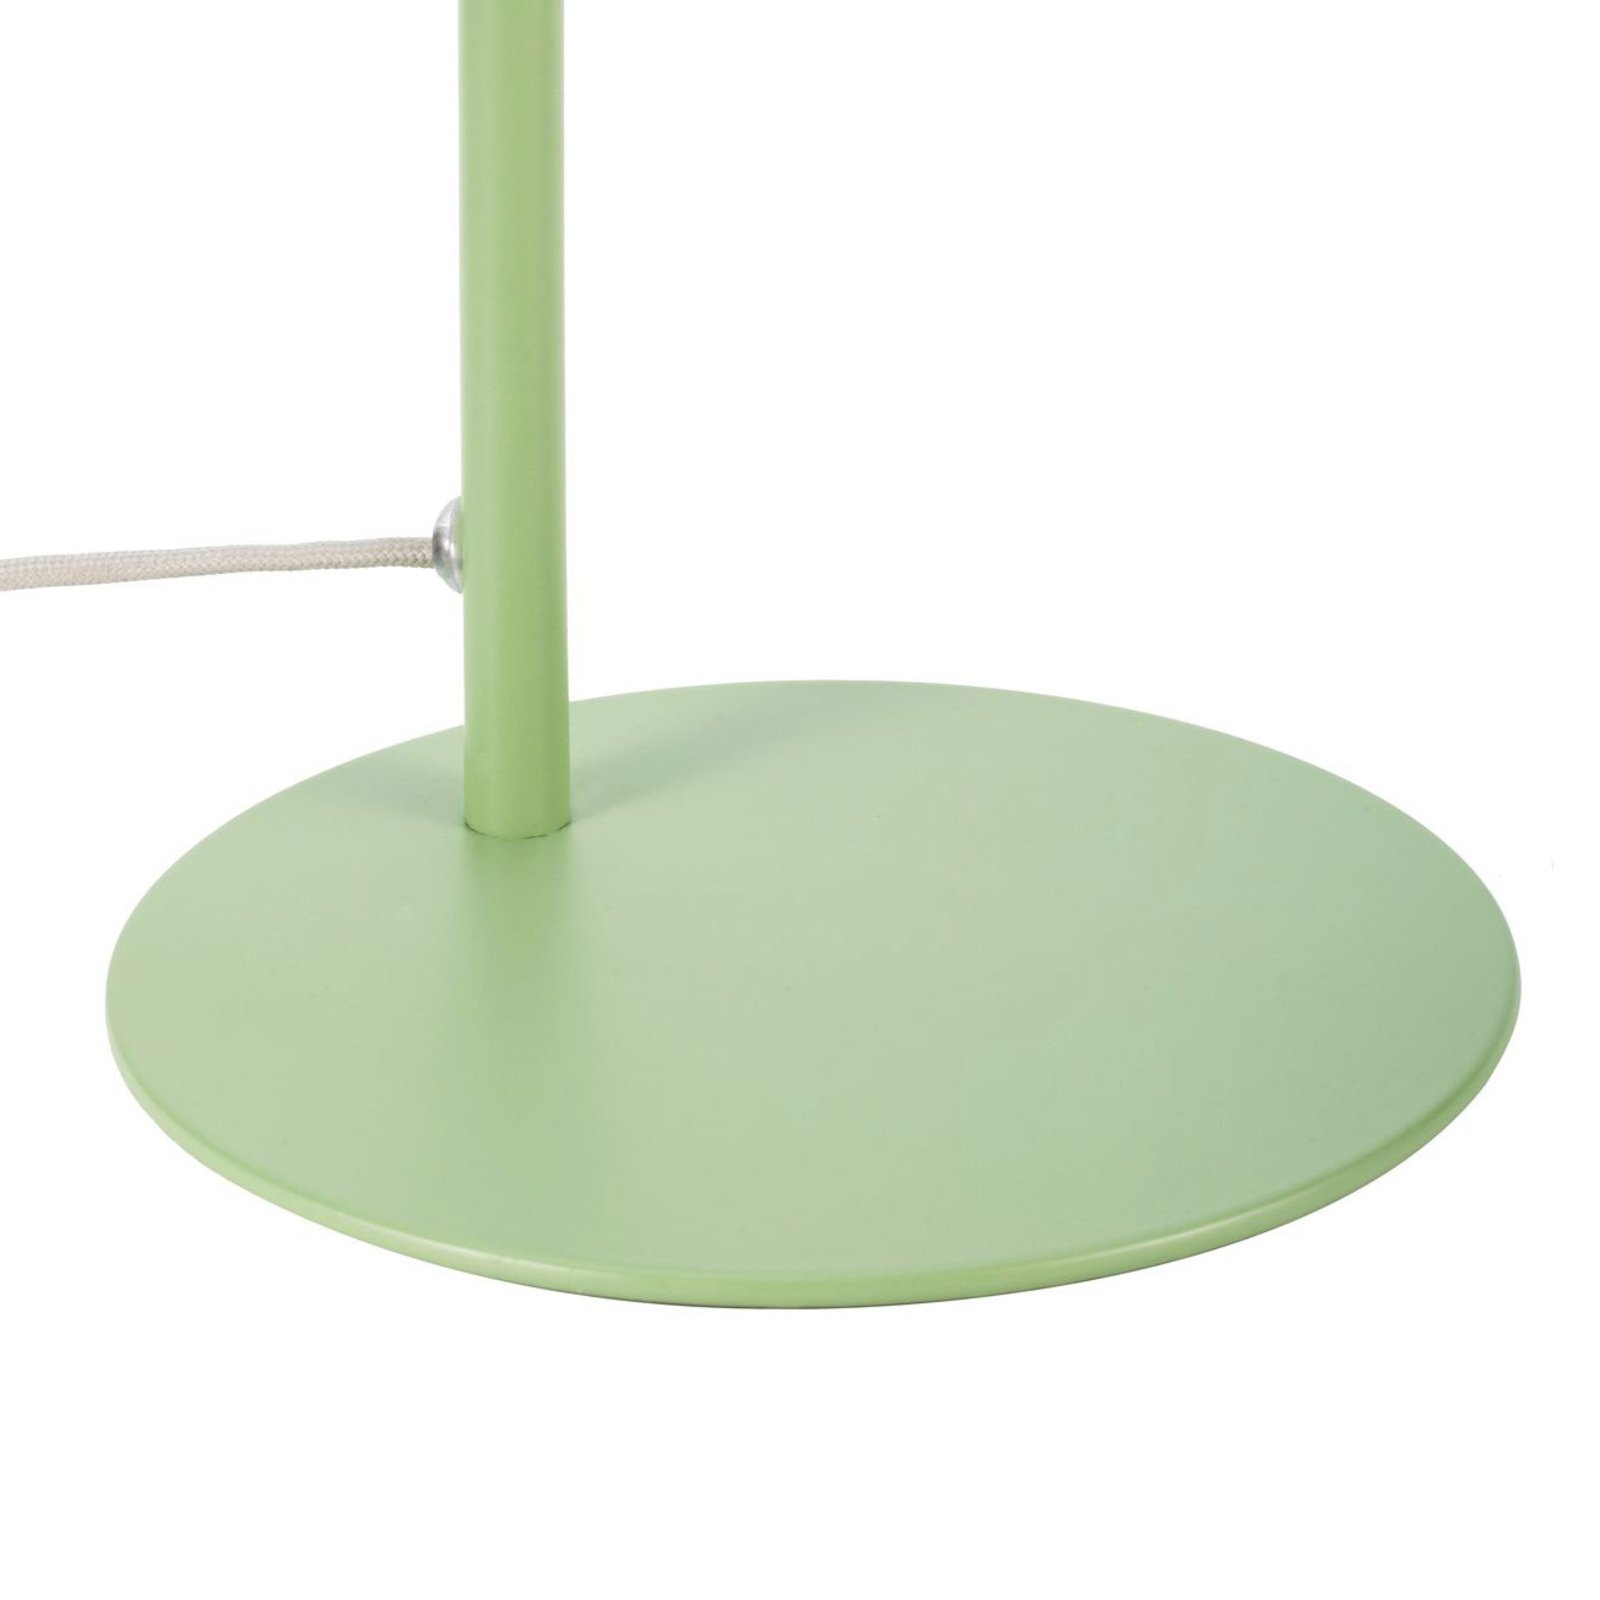 Pauleen True Pistachio bordslampa i grönt